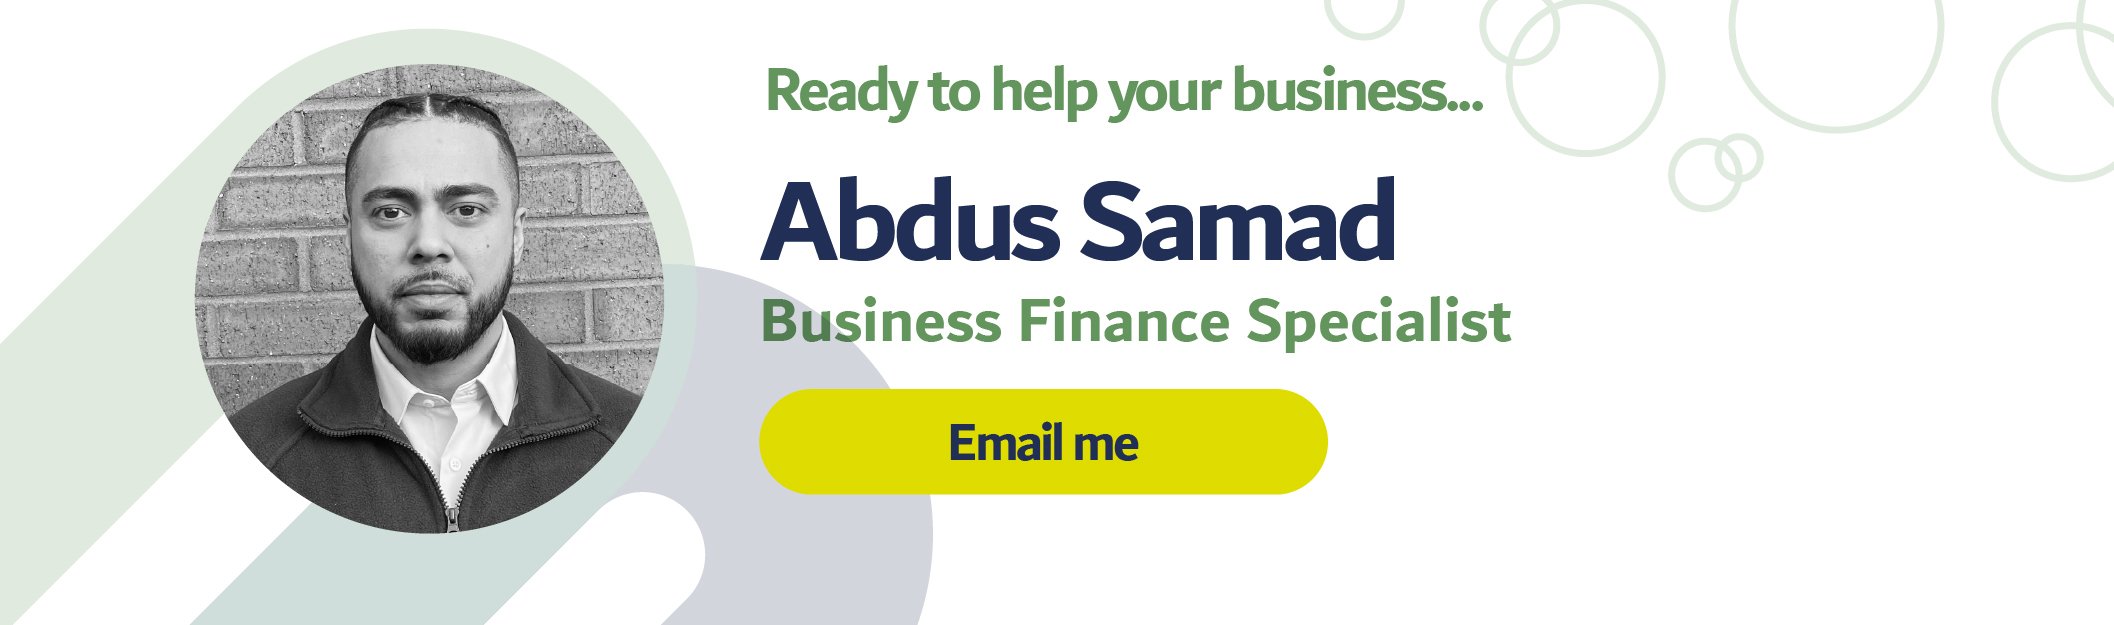 Abdus Samad, Business Finance Specialist at Millbrook